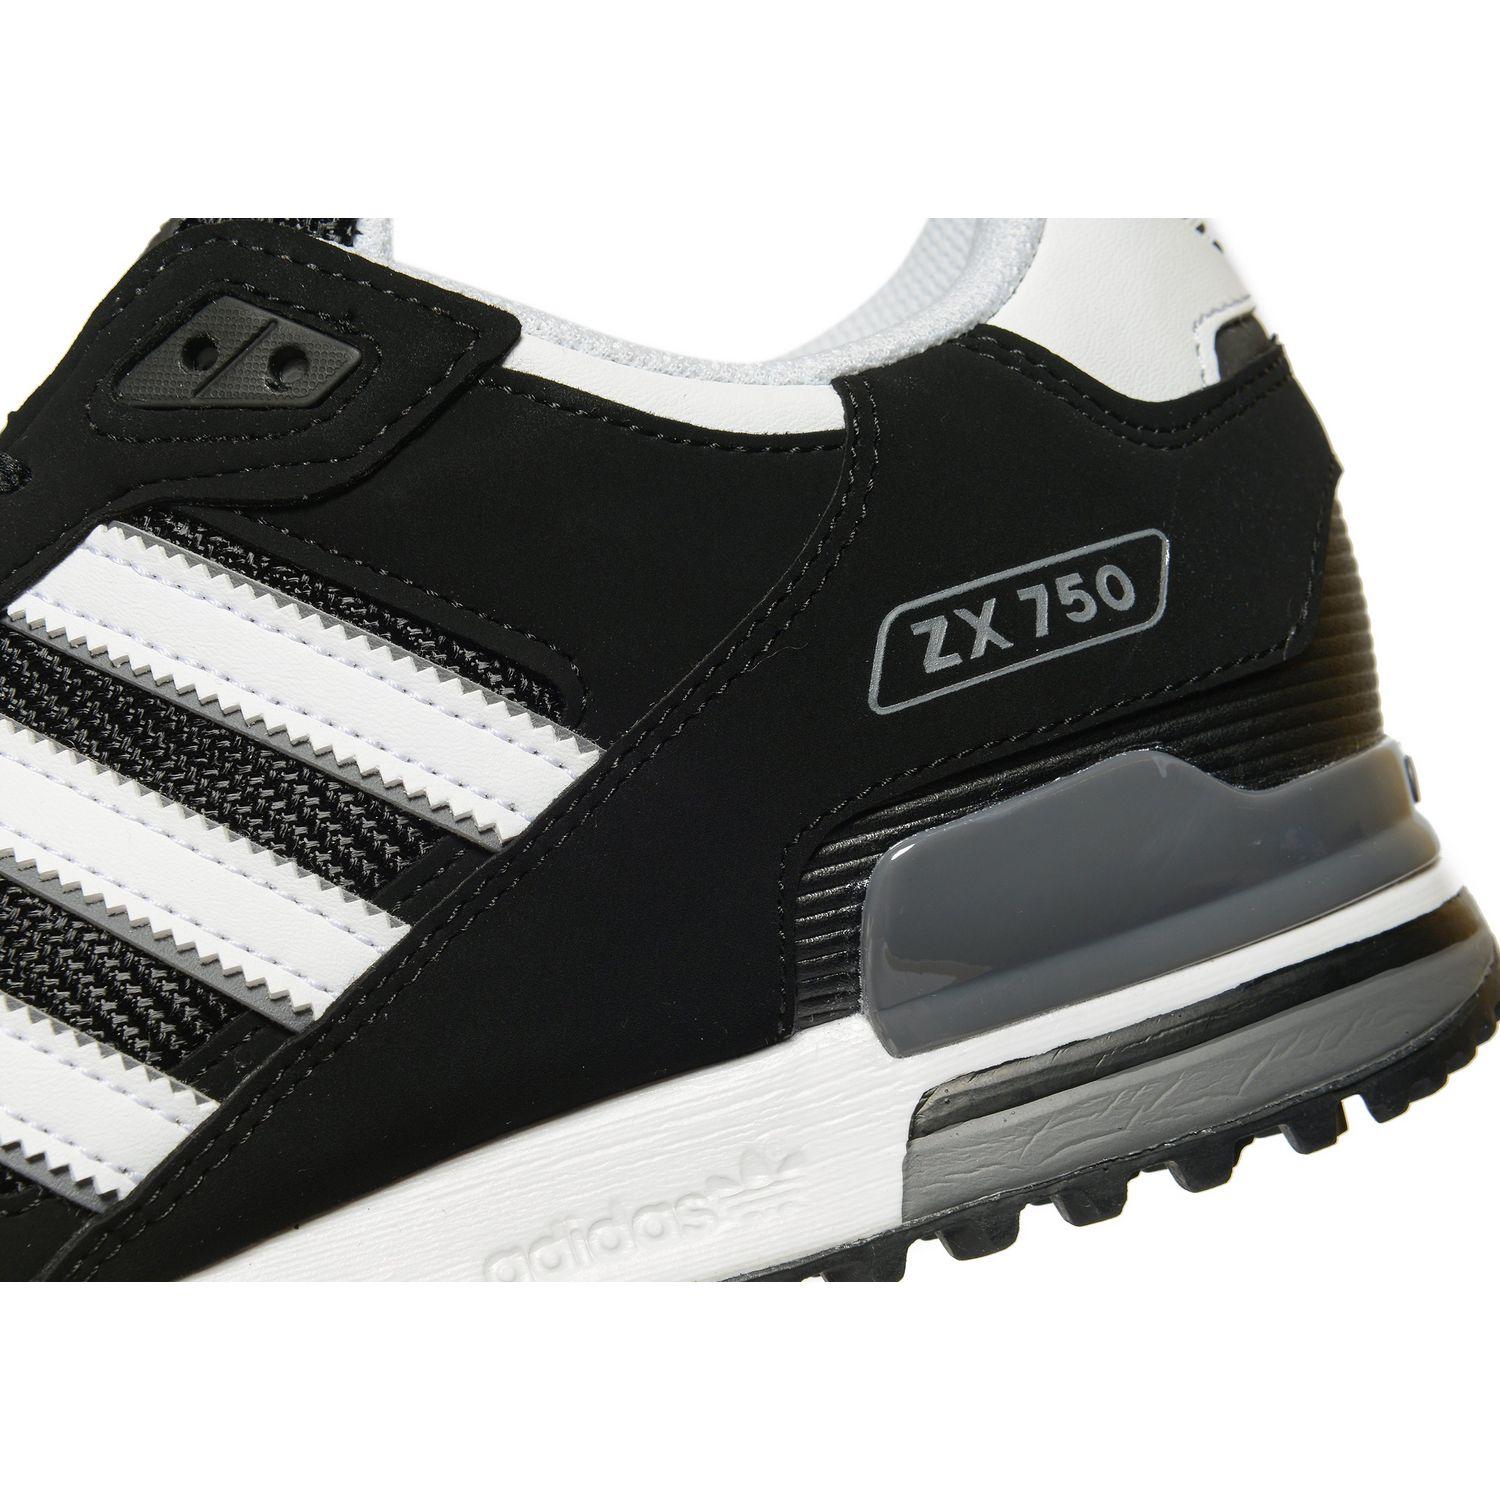 adidas originals zx 750 black and white